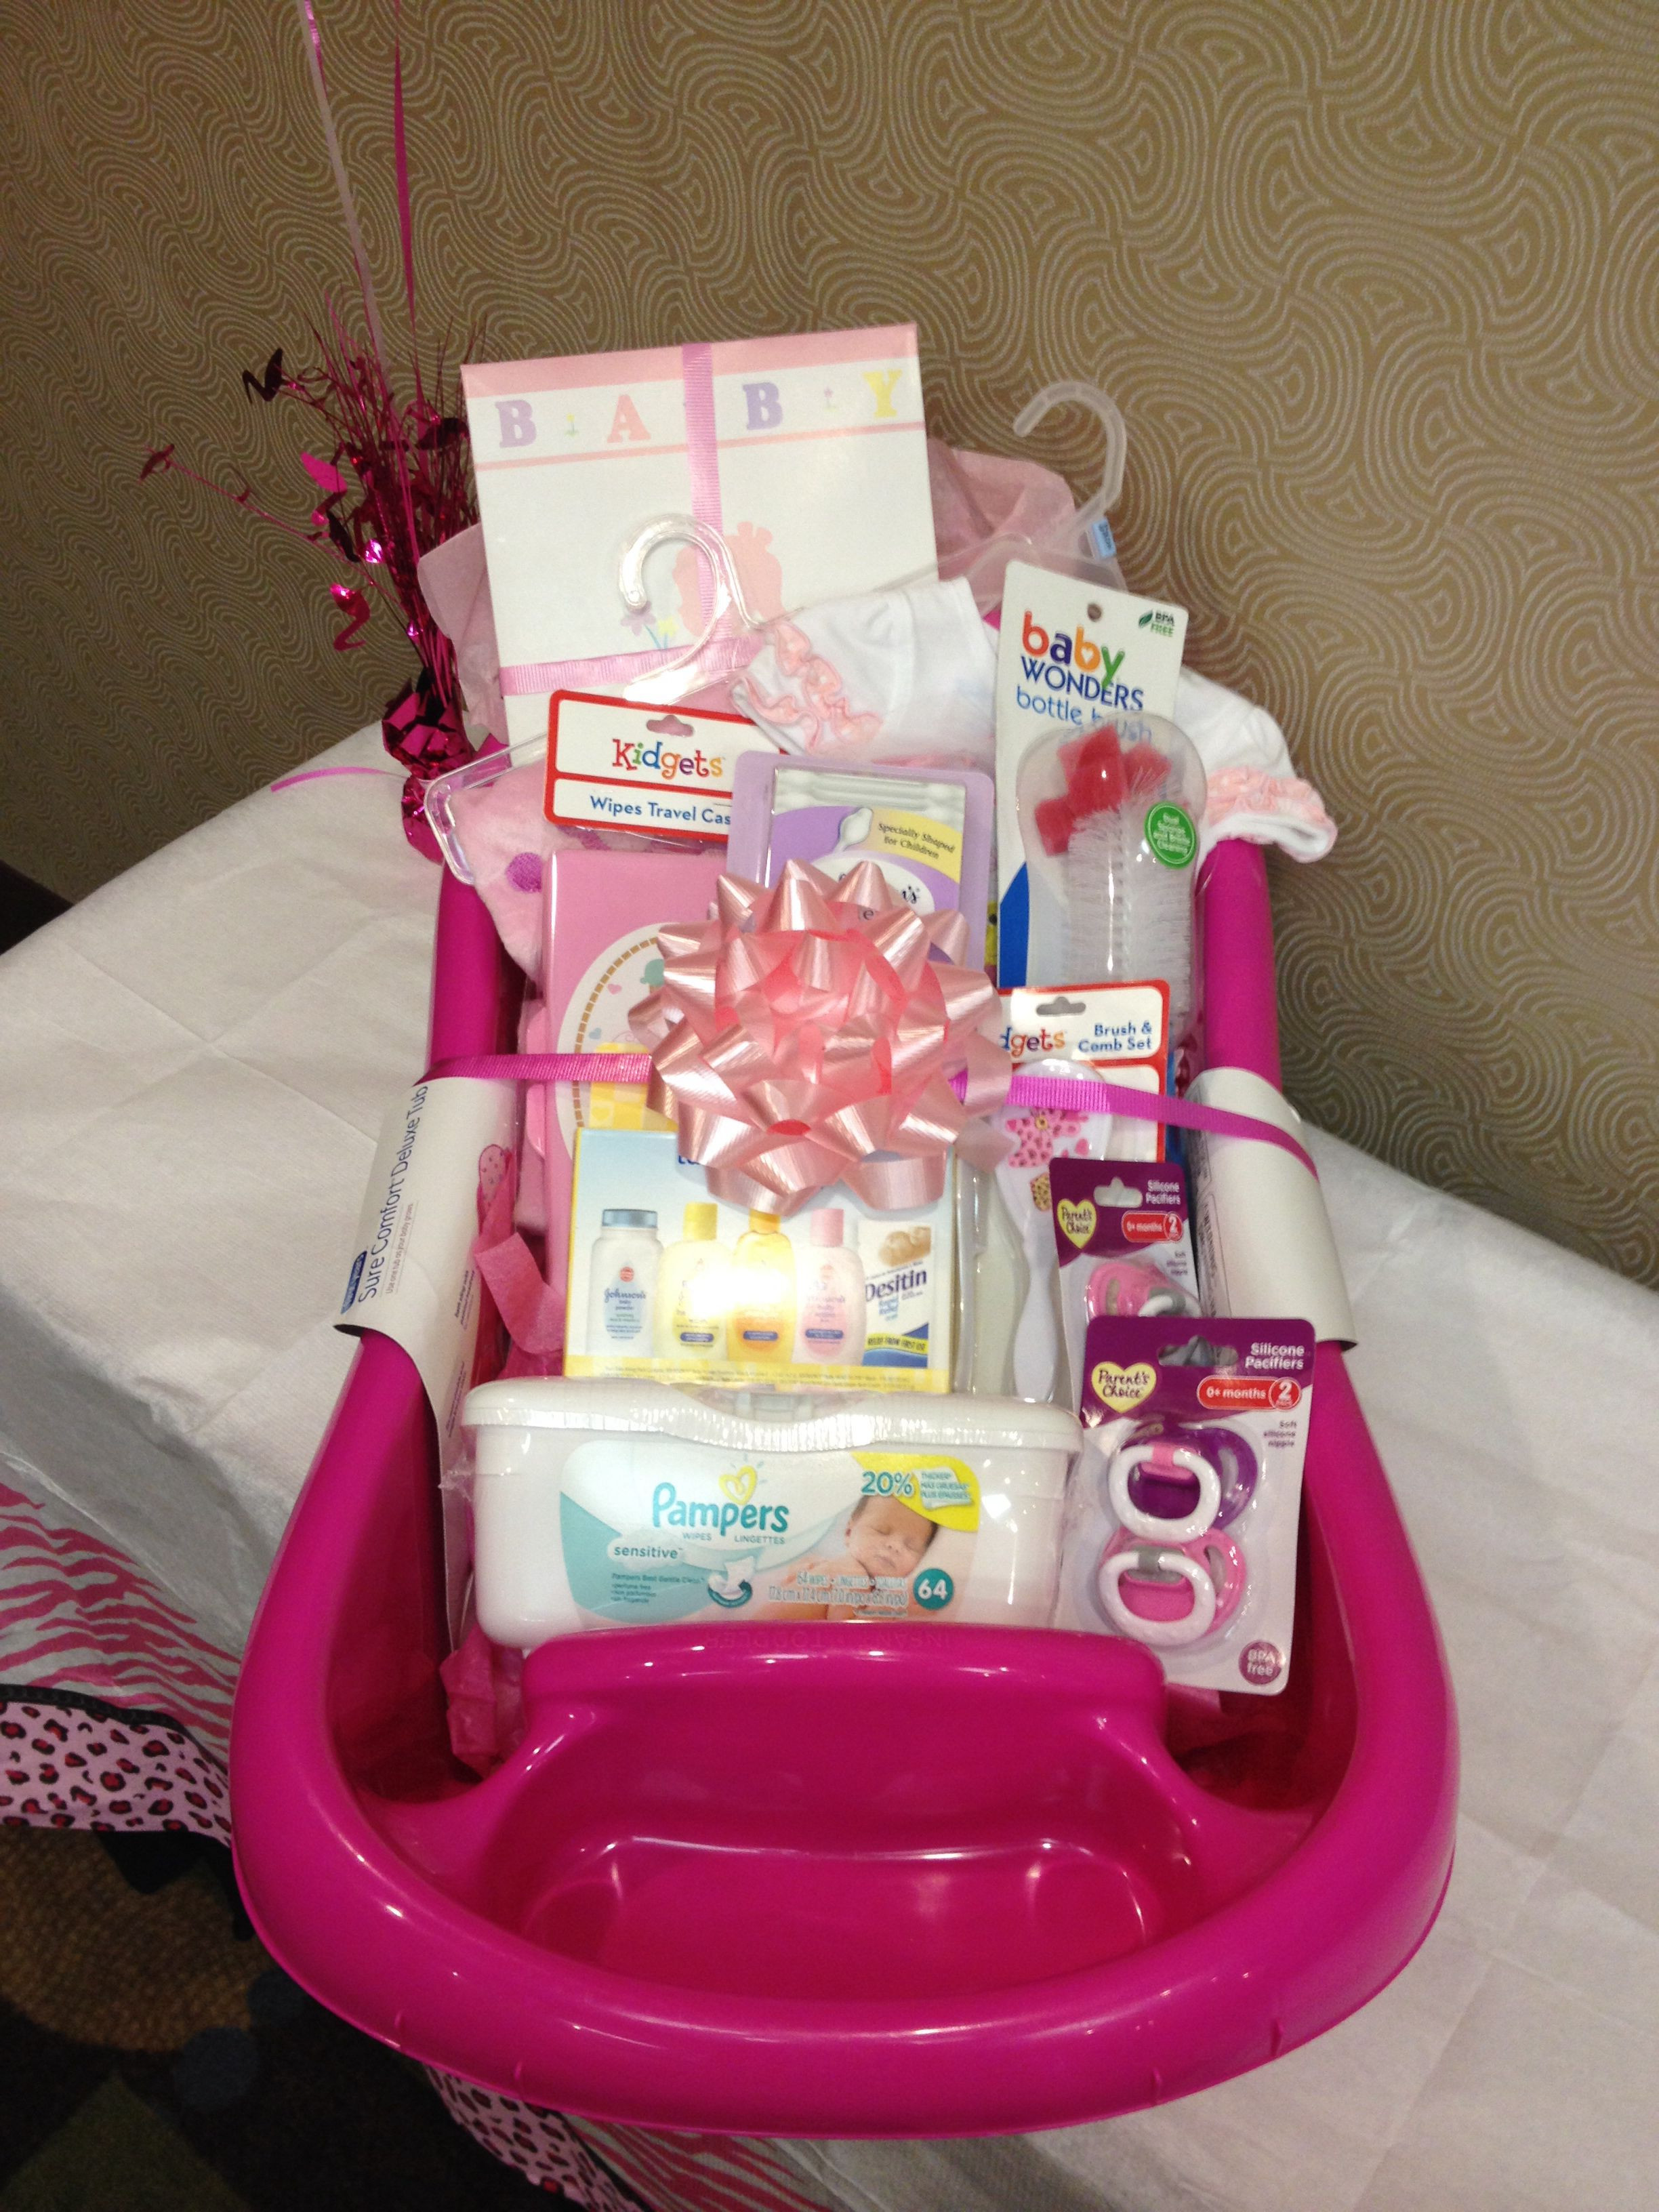 Bathroom Gift Basket Ideas
 Best 25 Baby tub t basket ideas on Pinterest